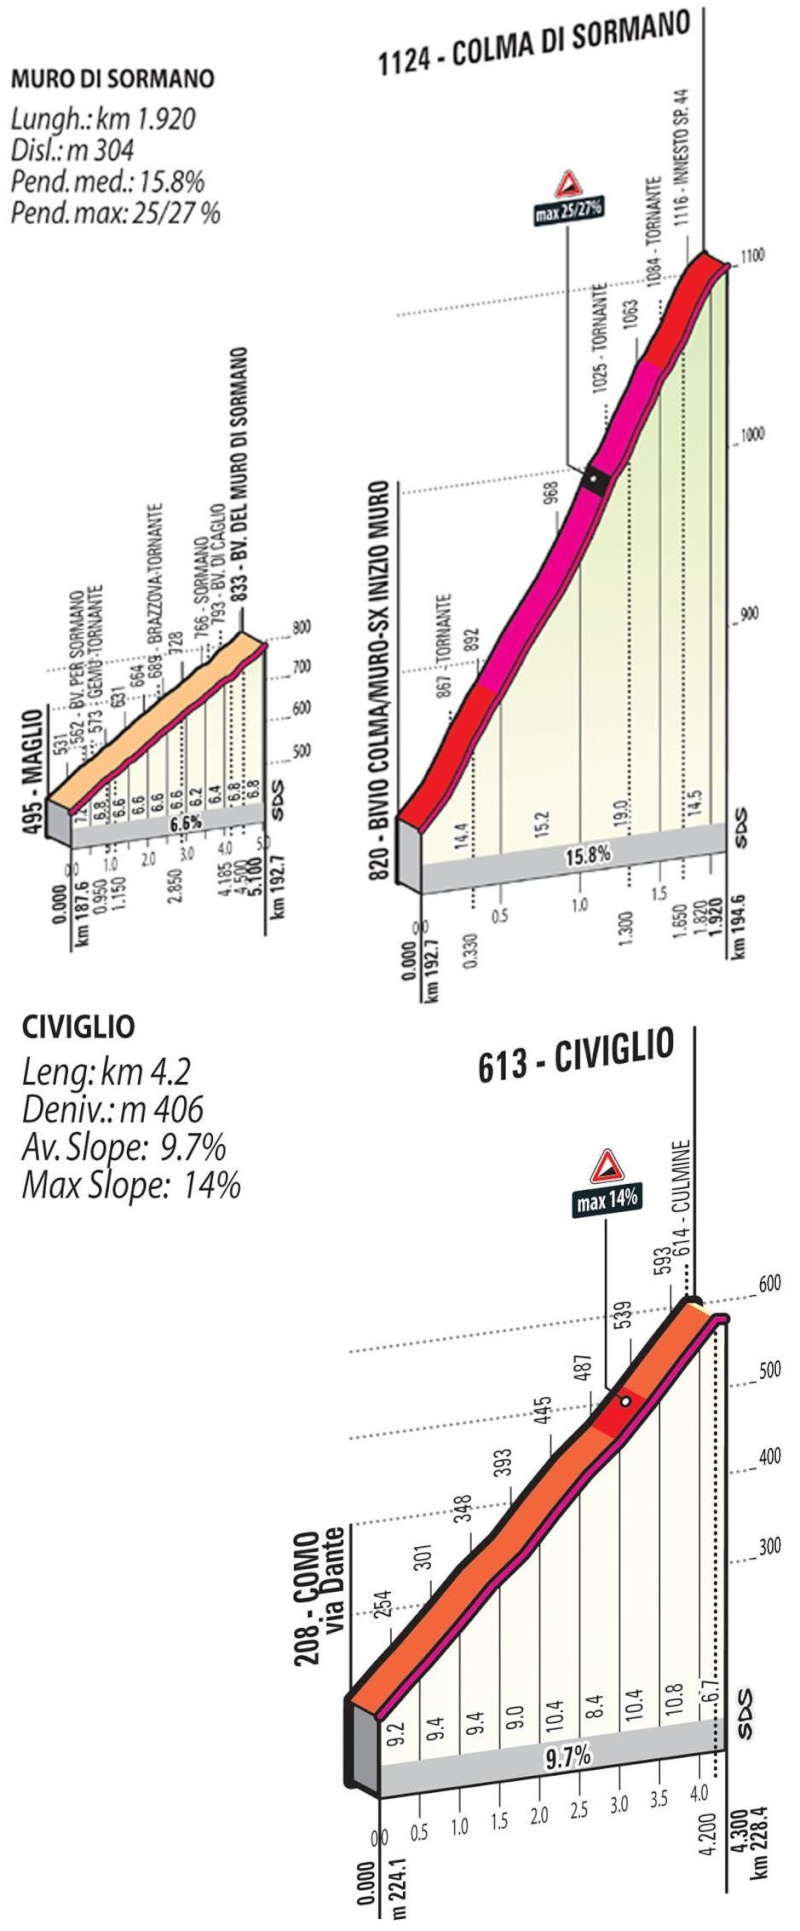 Giro - Il Lombardia (Giro di Lombardia) 2015 - (4 ottobre 2015) - Pagina 3 Sorman10